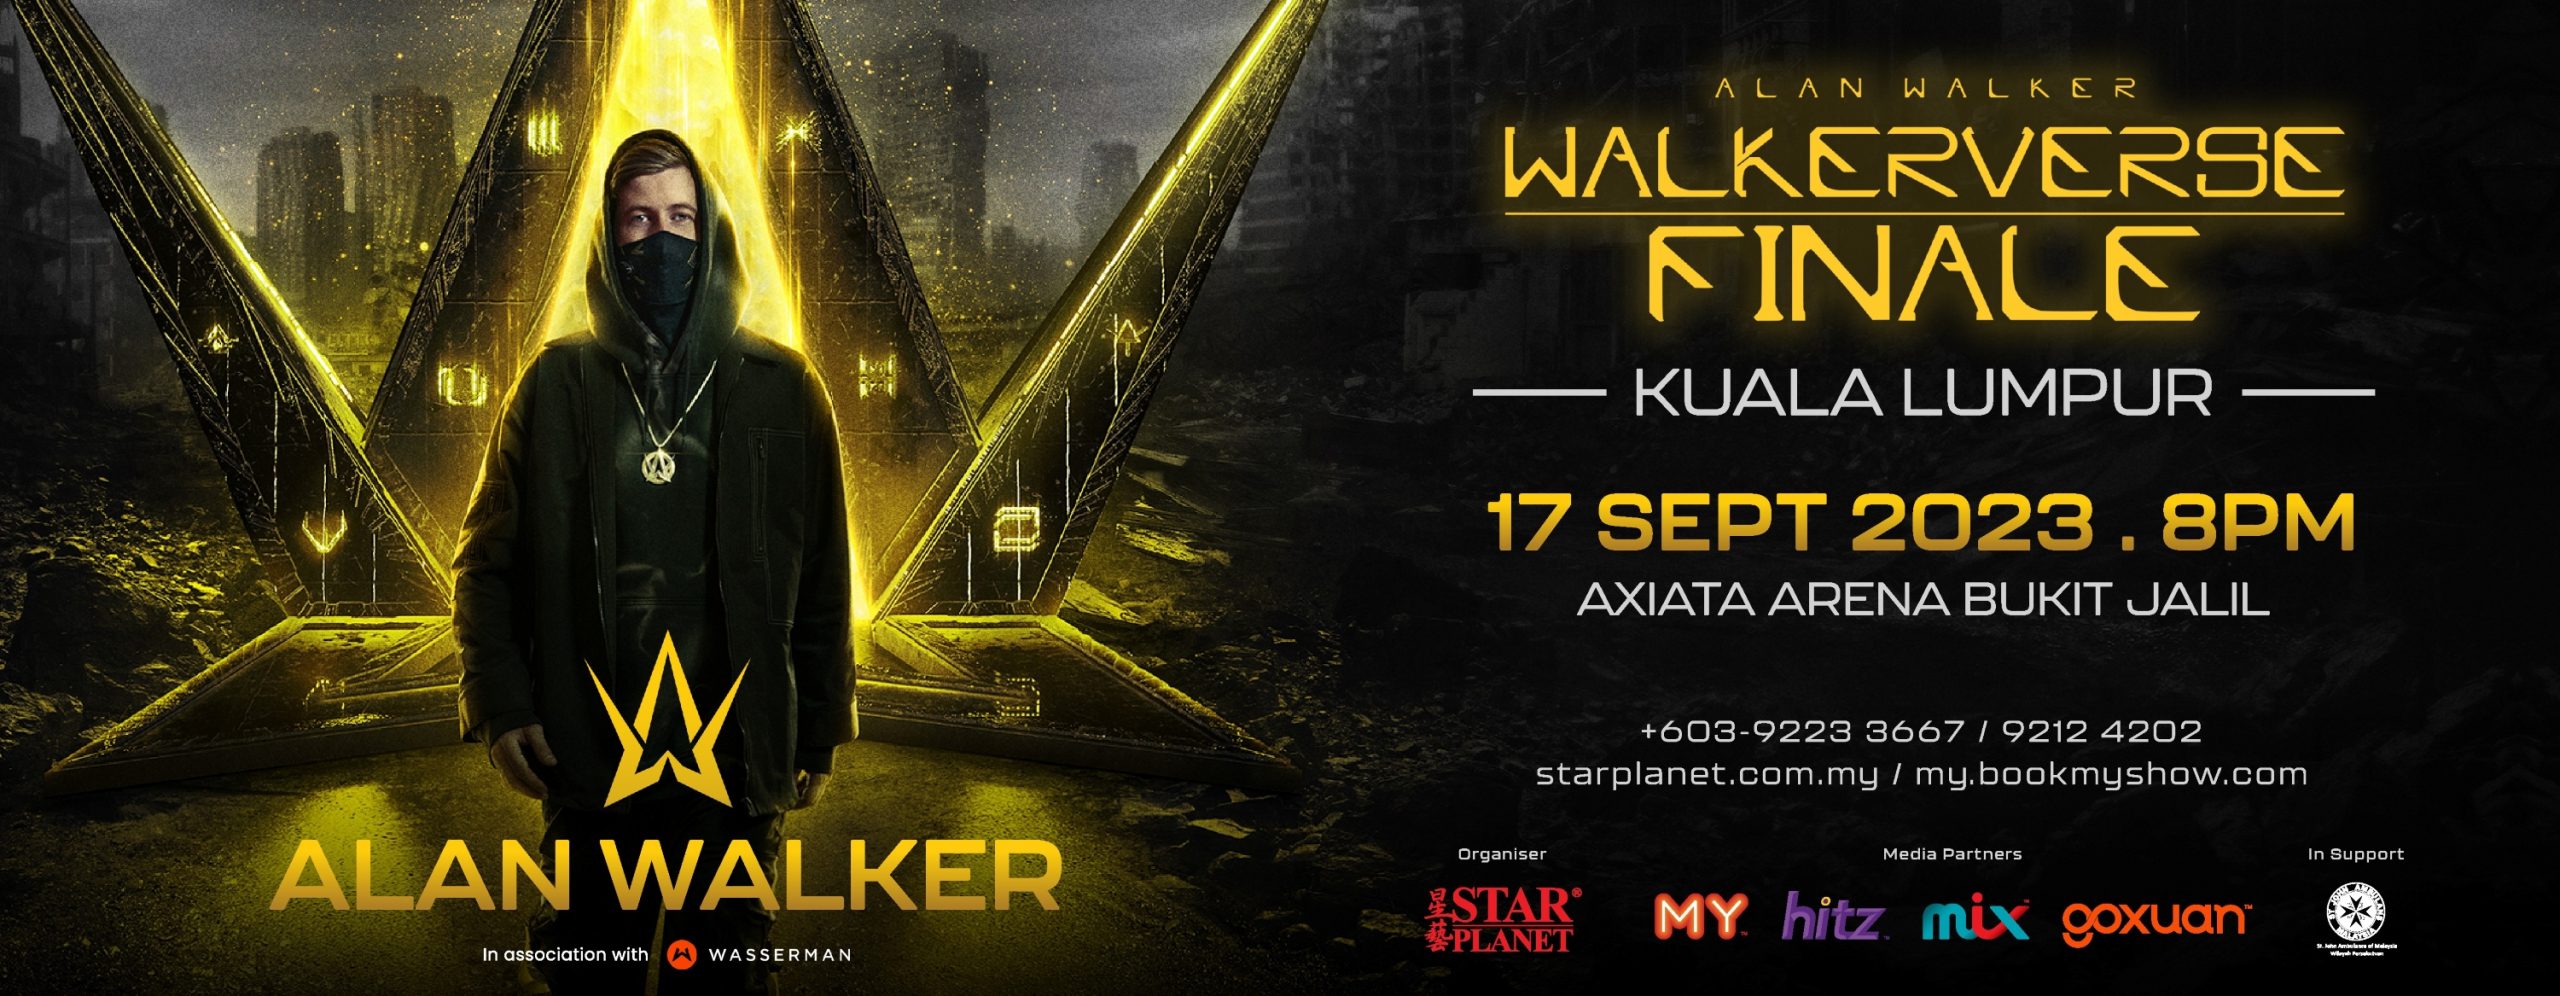 alan walker walkerverse the tour 2023